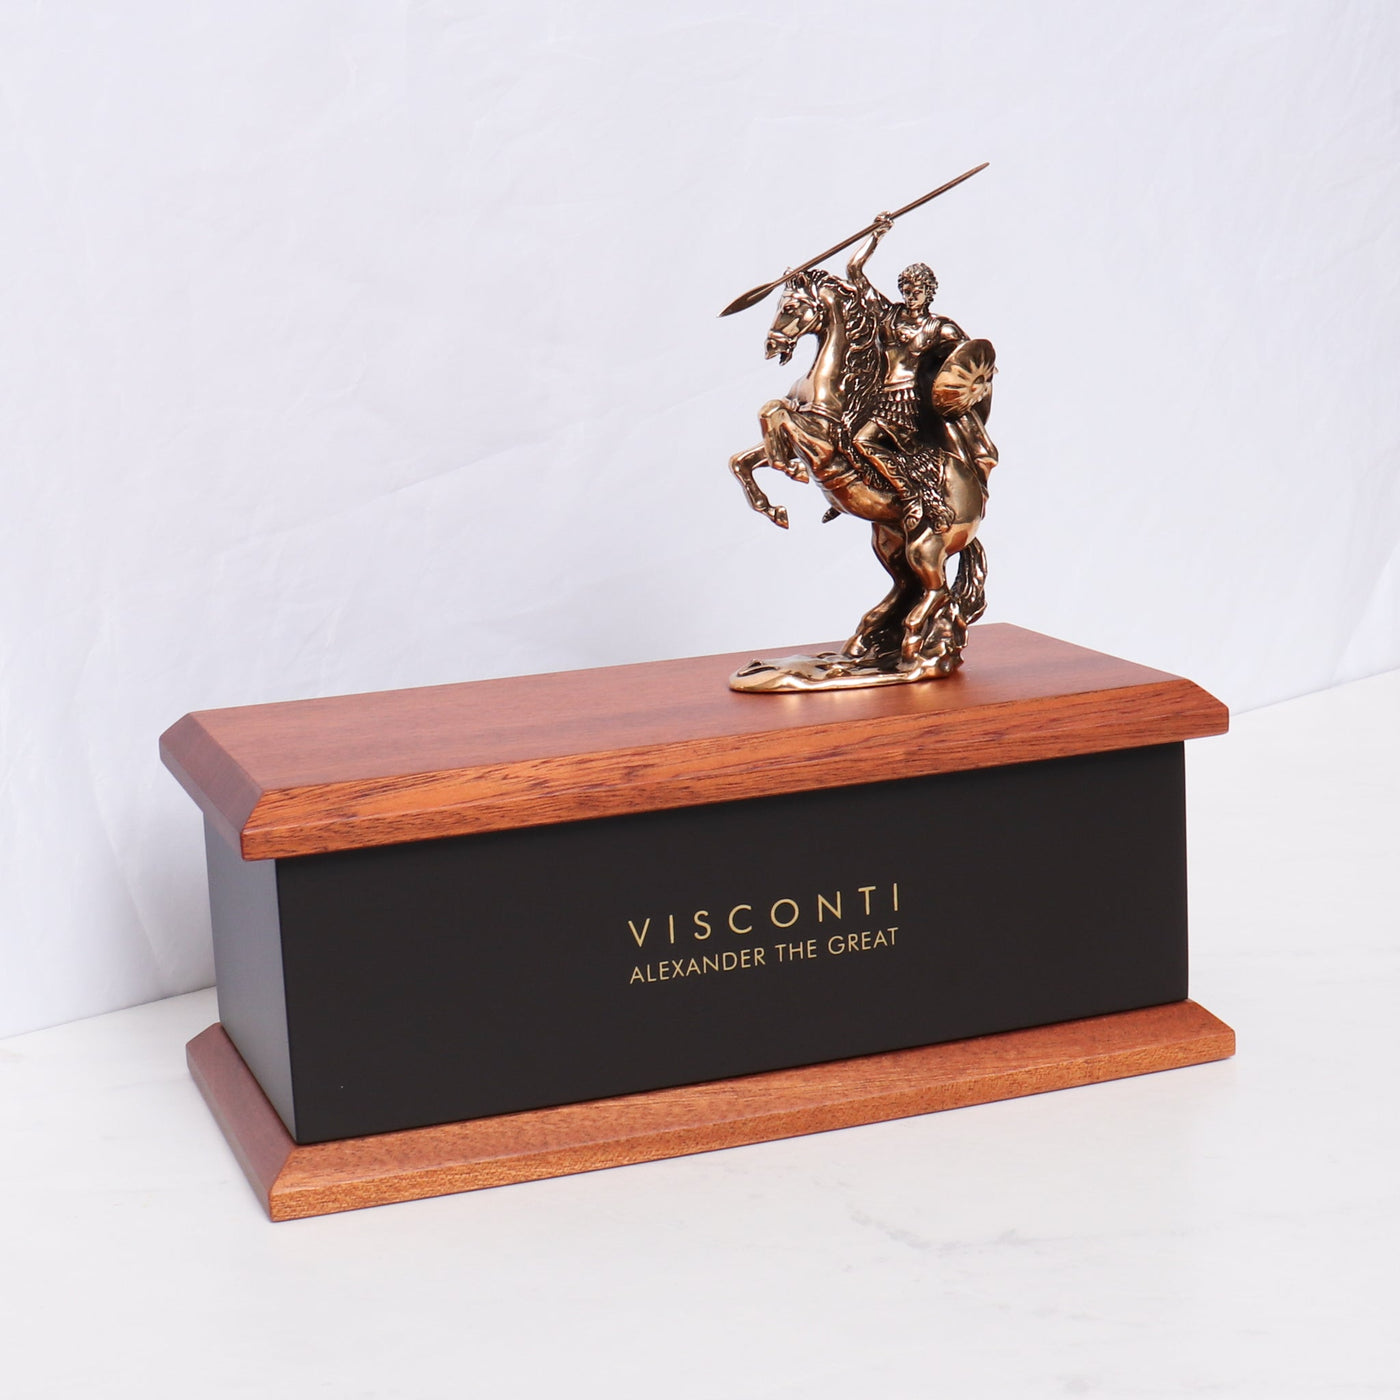 Visconti Alexander the Great Limited Edition Fountain Pen Decorative Box